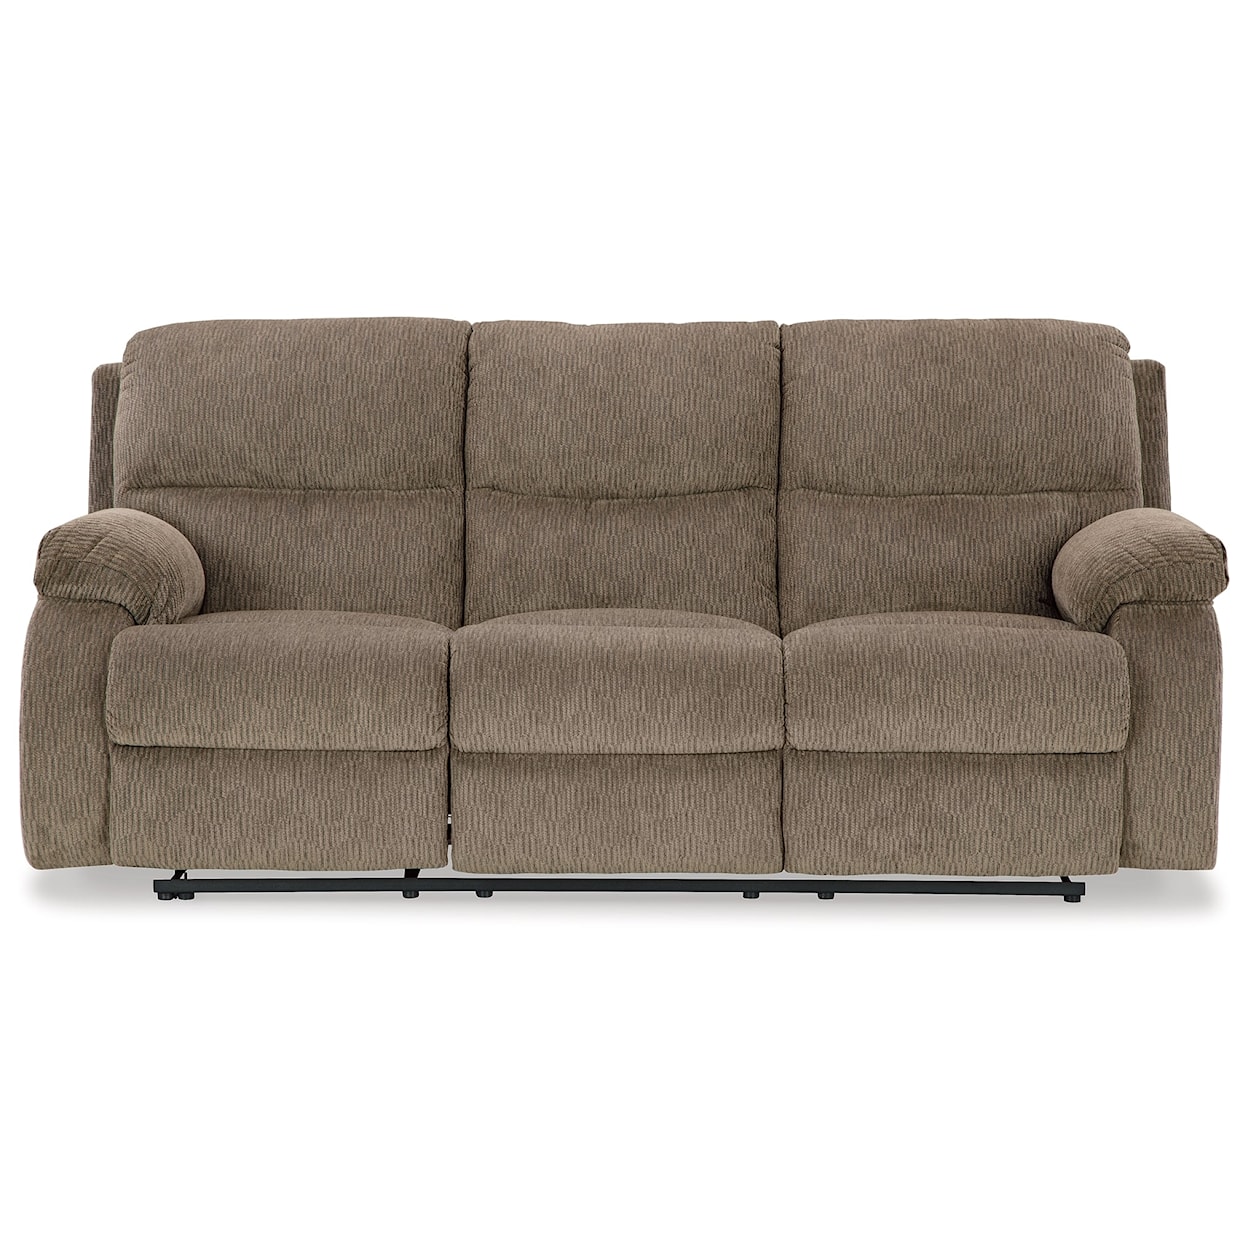 Signature Design by Ashley Furniture Scranto Reclining Sofa